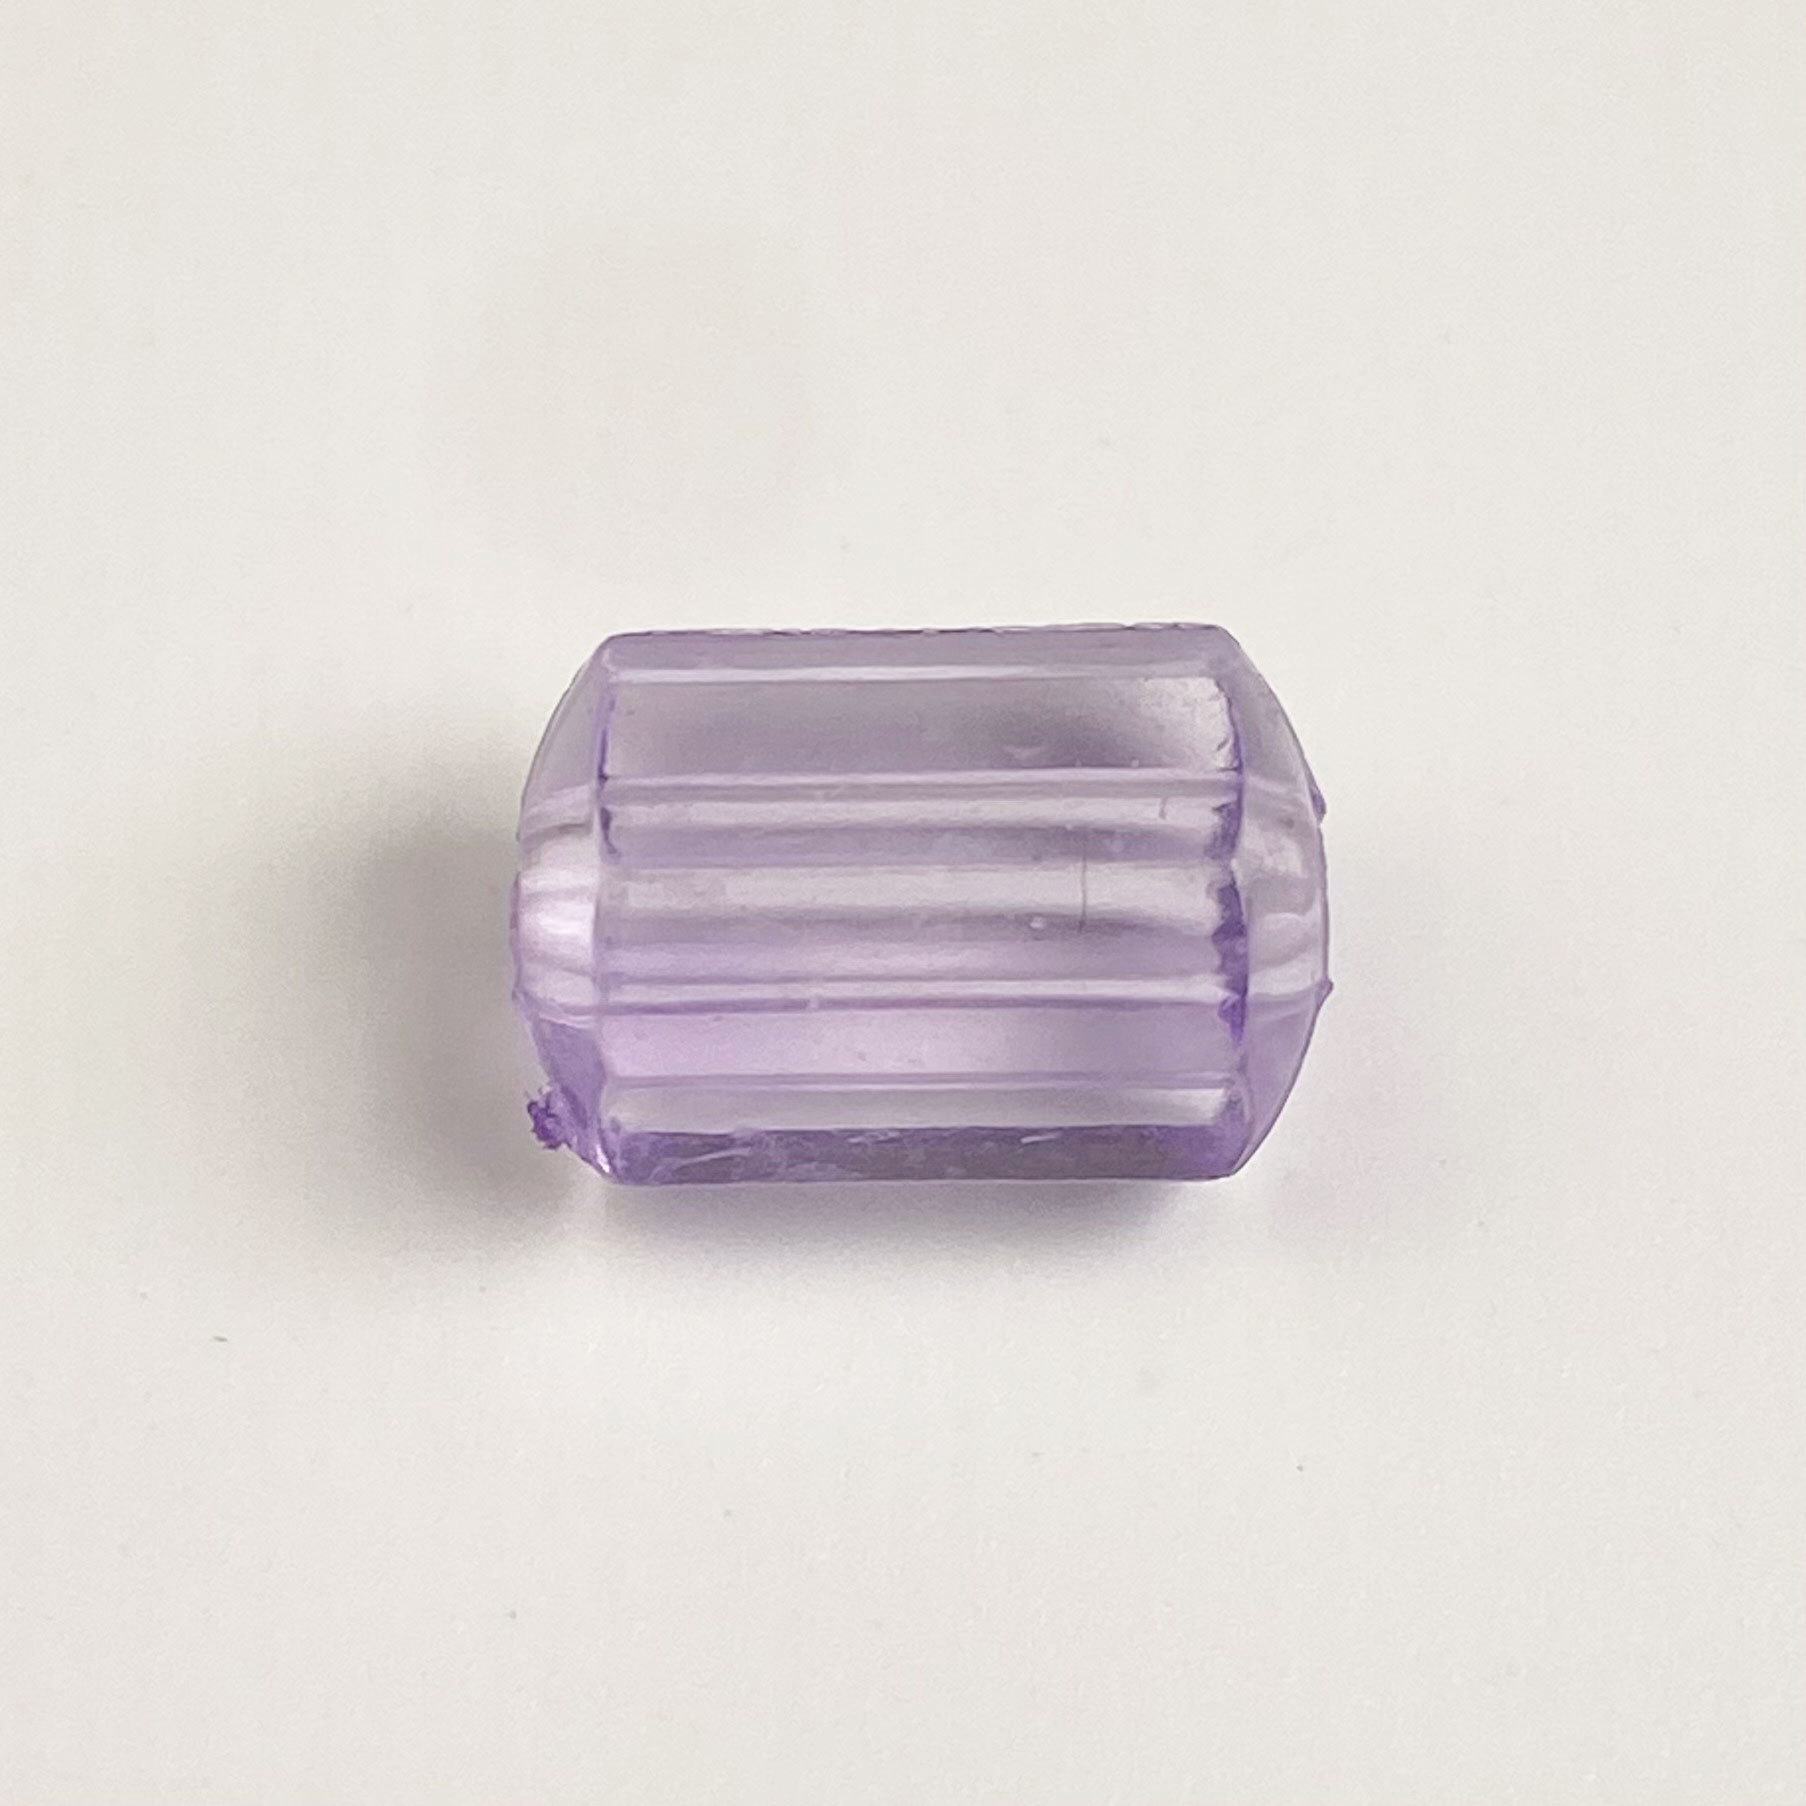 4 purple